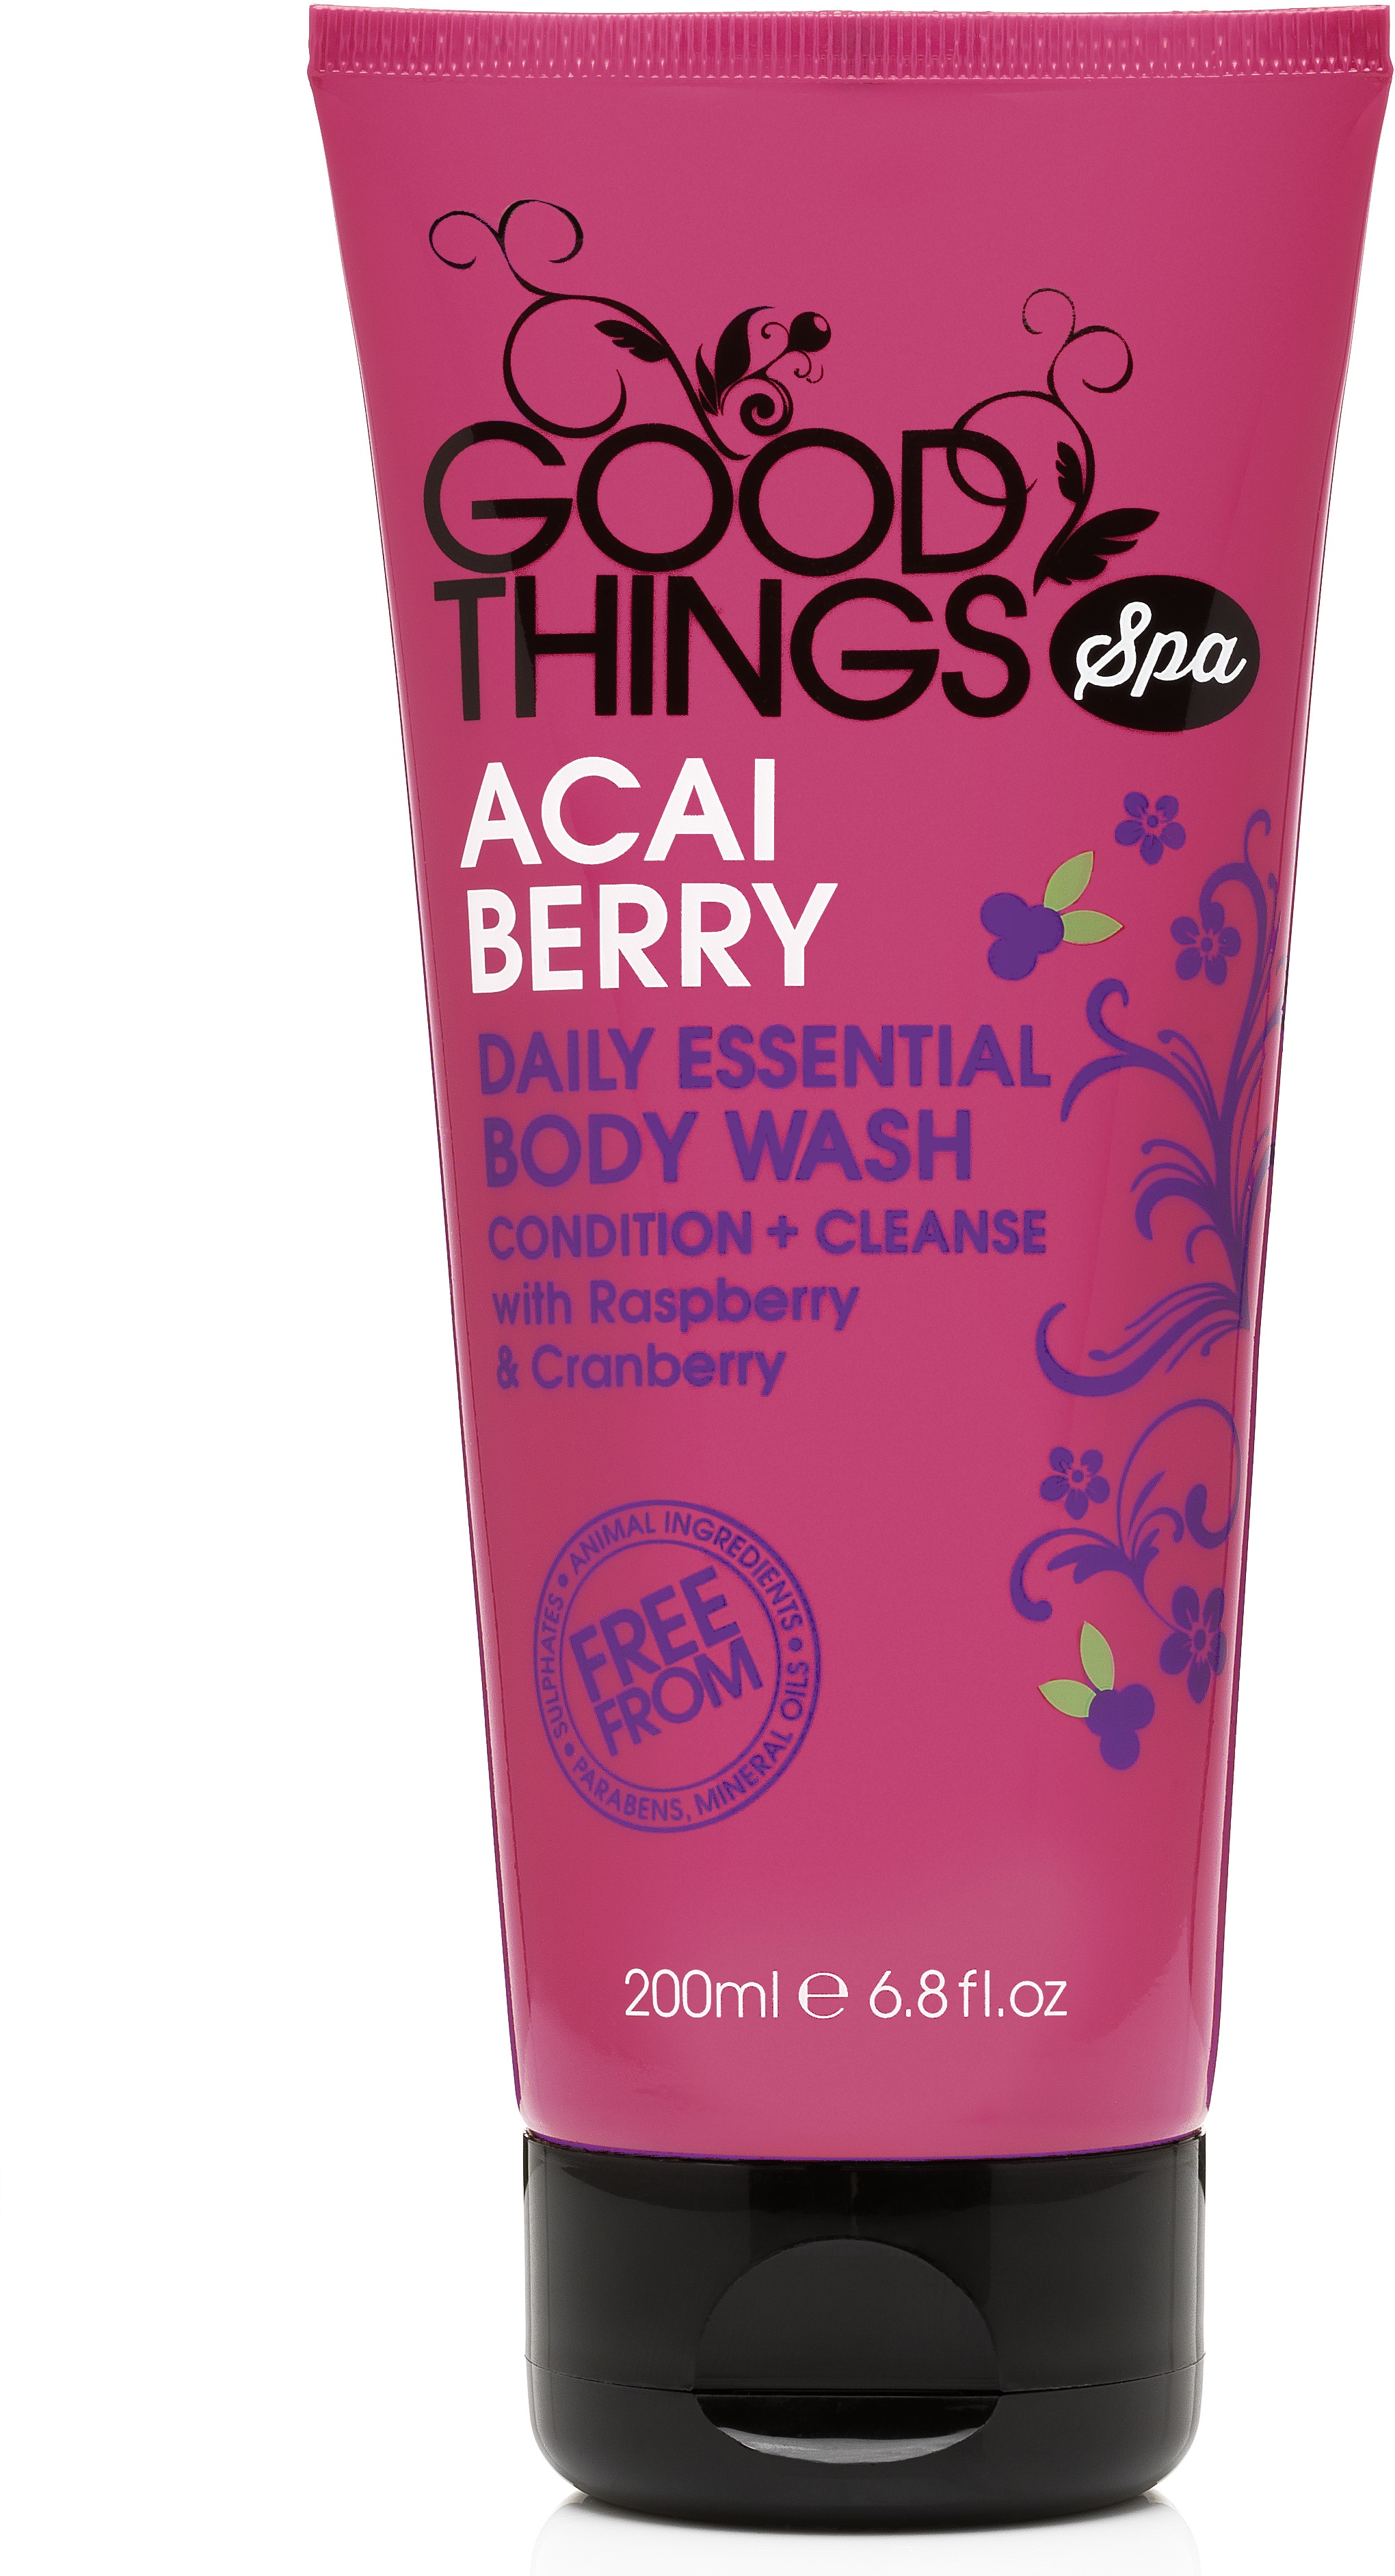 Good Things Acai Berry Body Wash 200ml